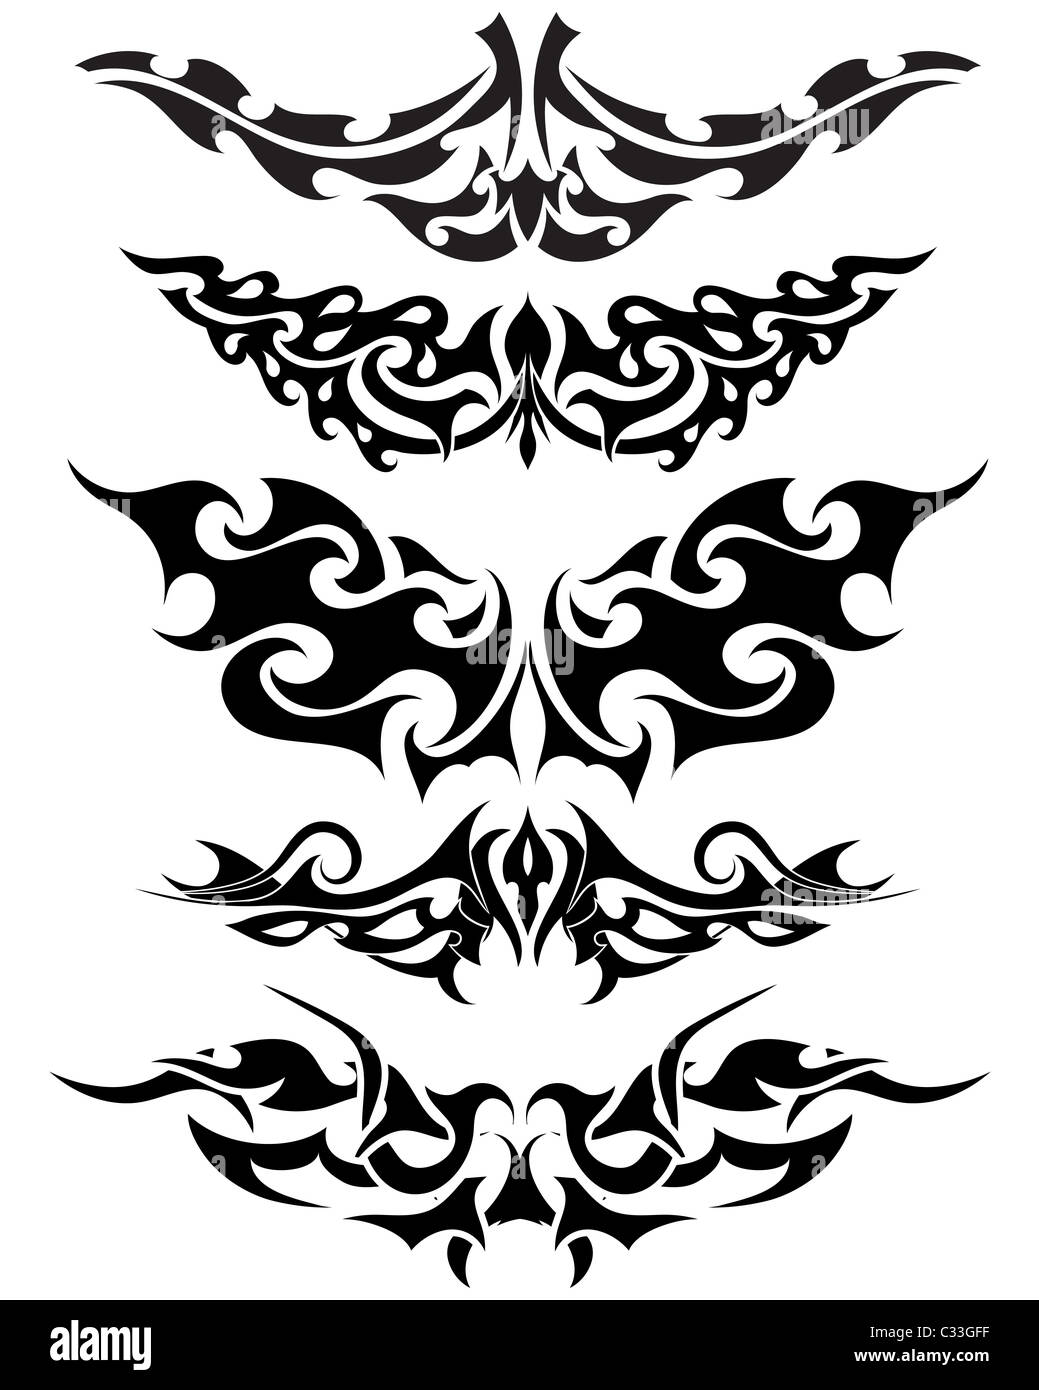 Tribal tattoo dragon with yin yang symbol black Sticker  Spreadshirt